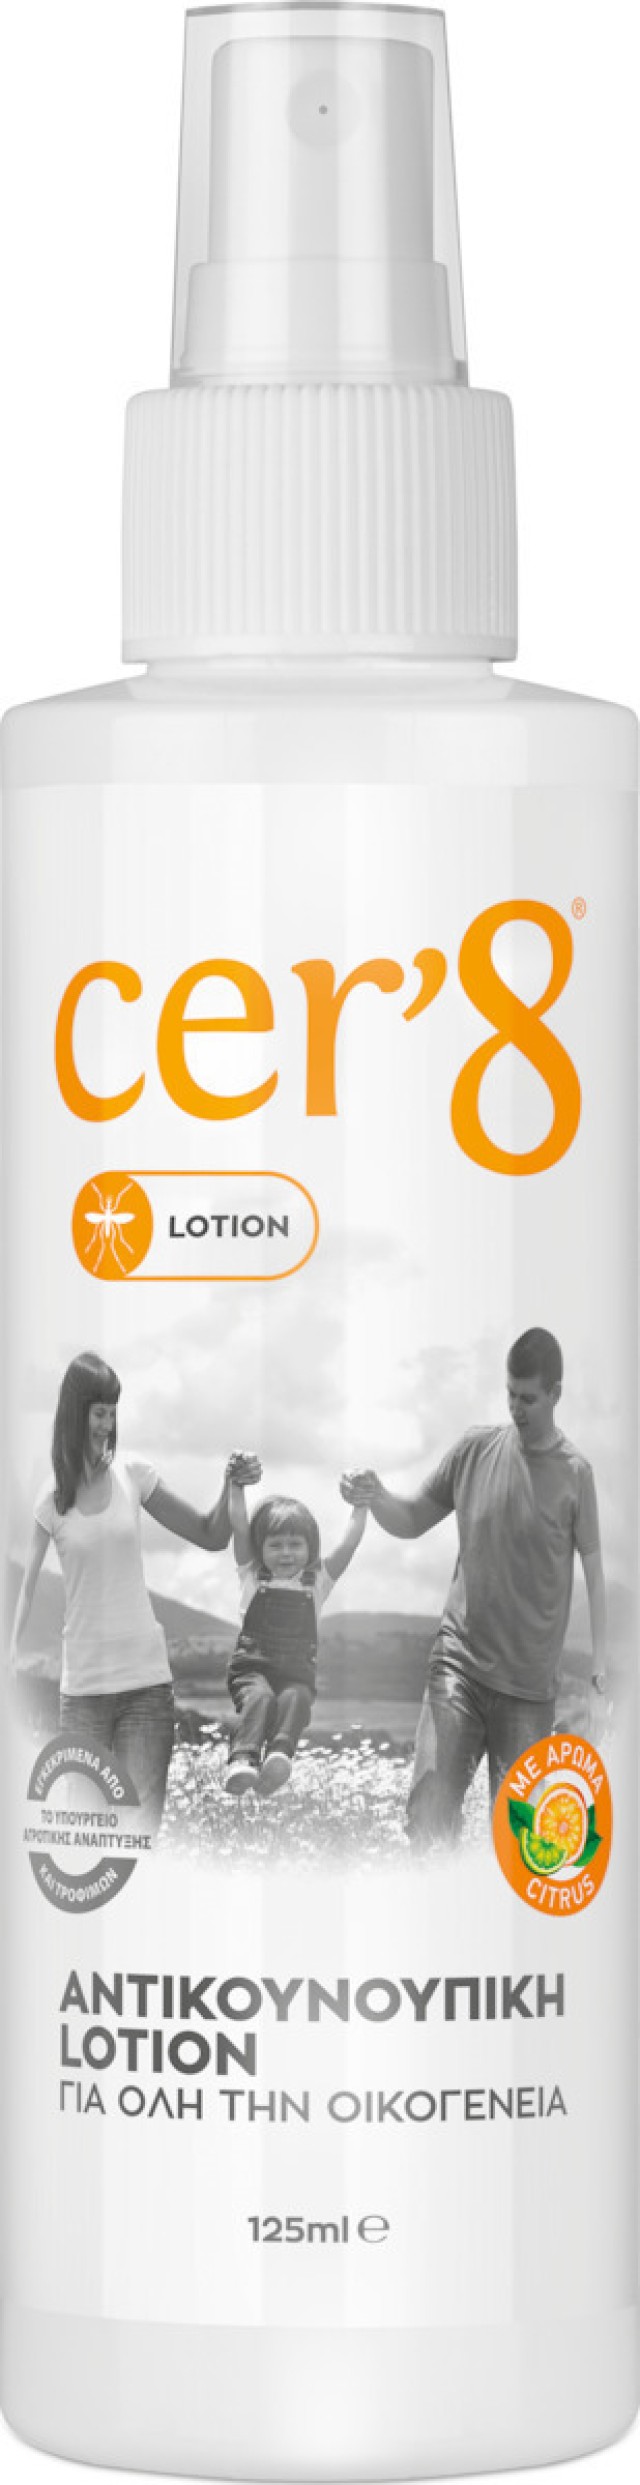 Vican - Cer8 Εντομοαπωθητική Λοσιόν 125ml